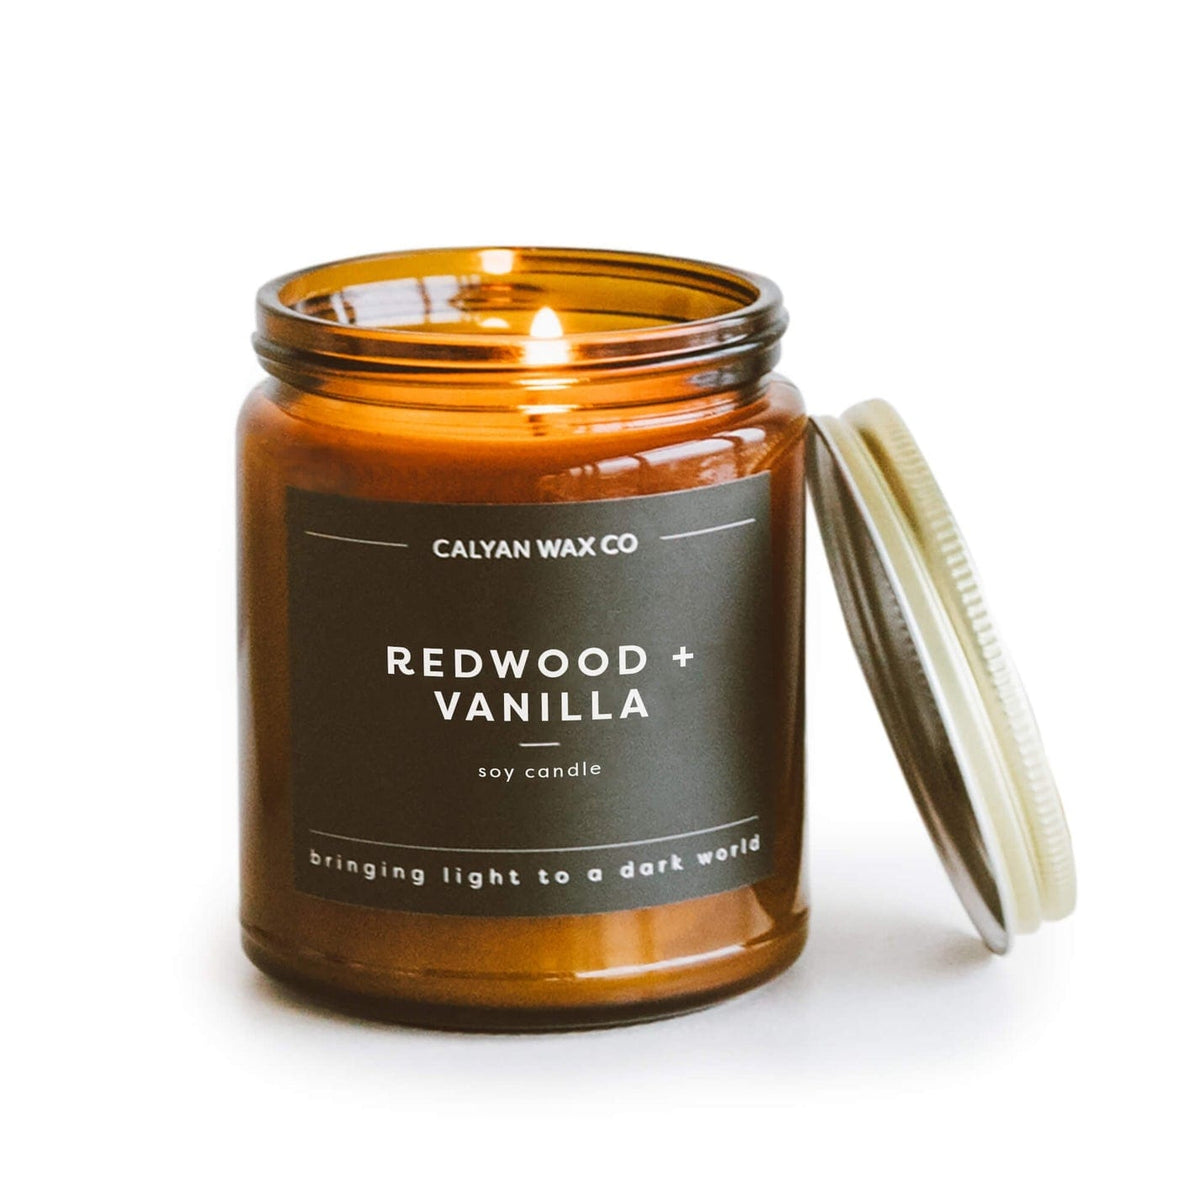 Calyan Wax Co. Redwood + Vanilla Soy Candle